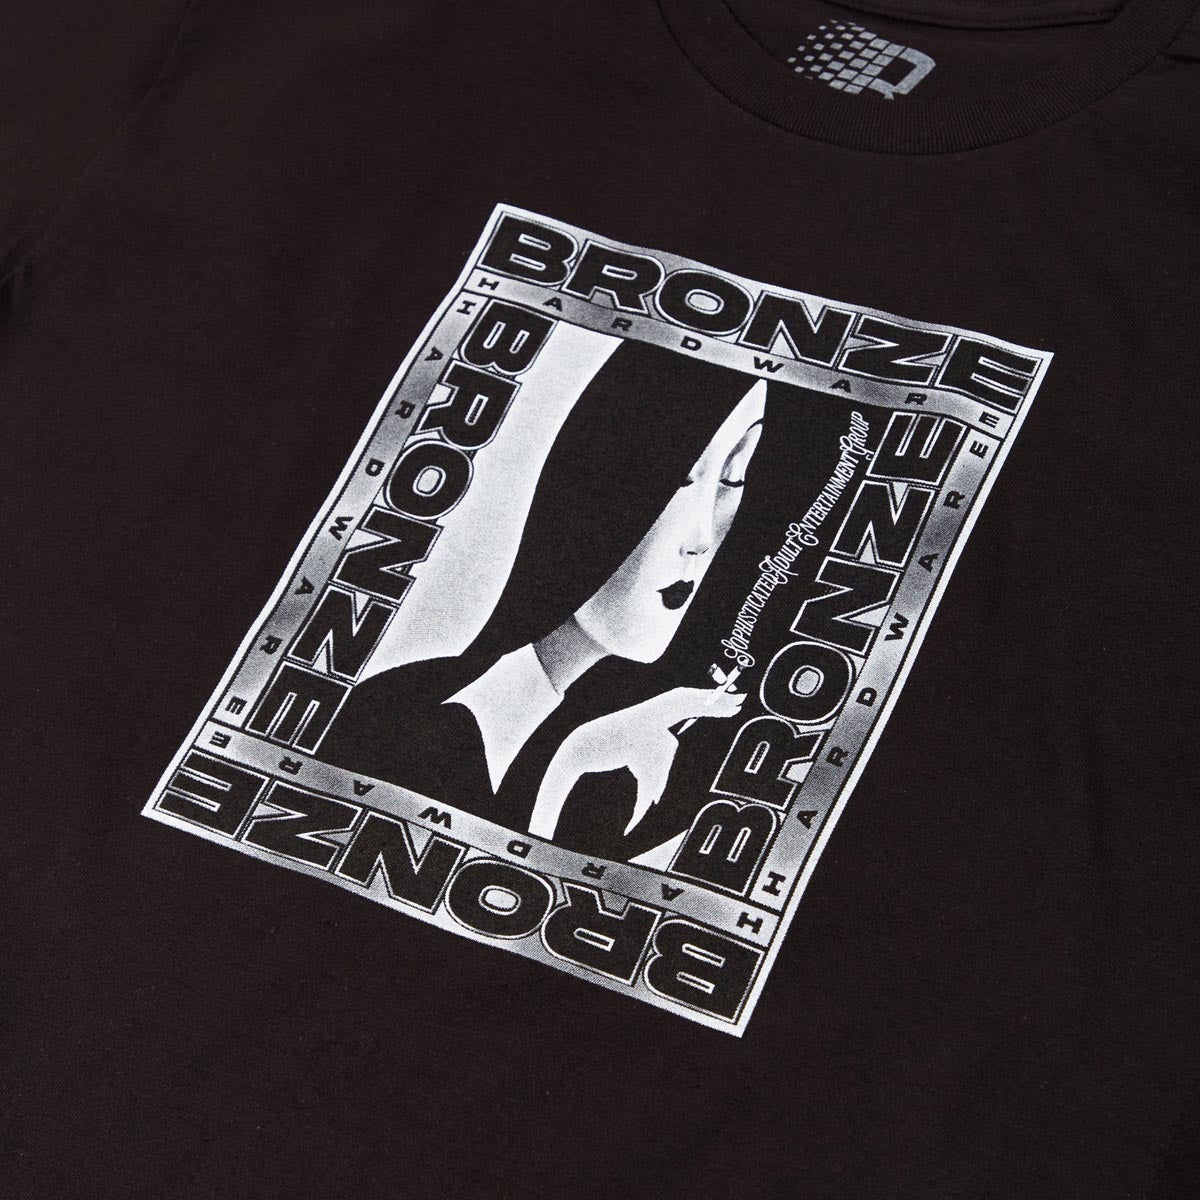 Bronze 56k Church T-Shirt - Black image 2